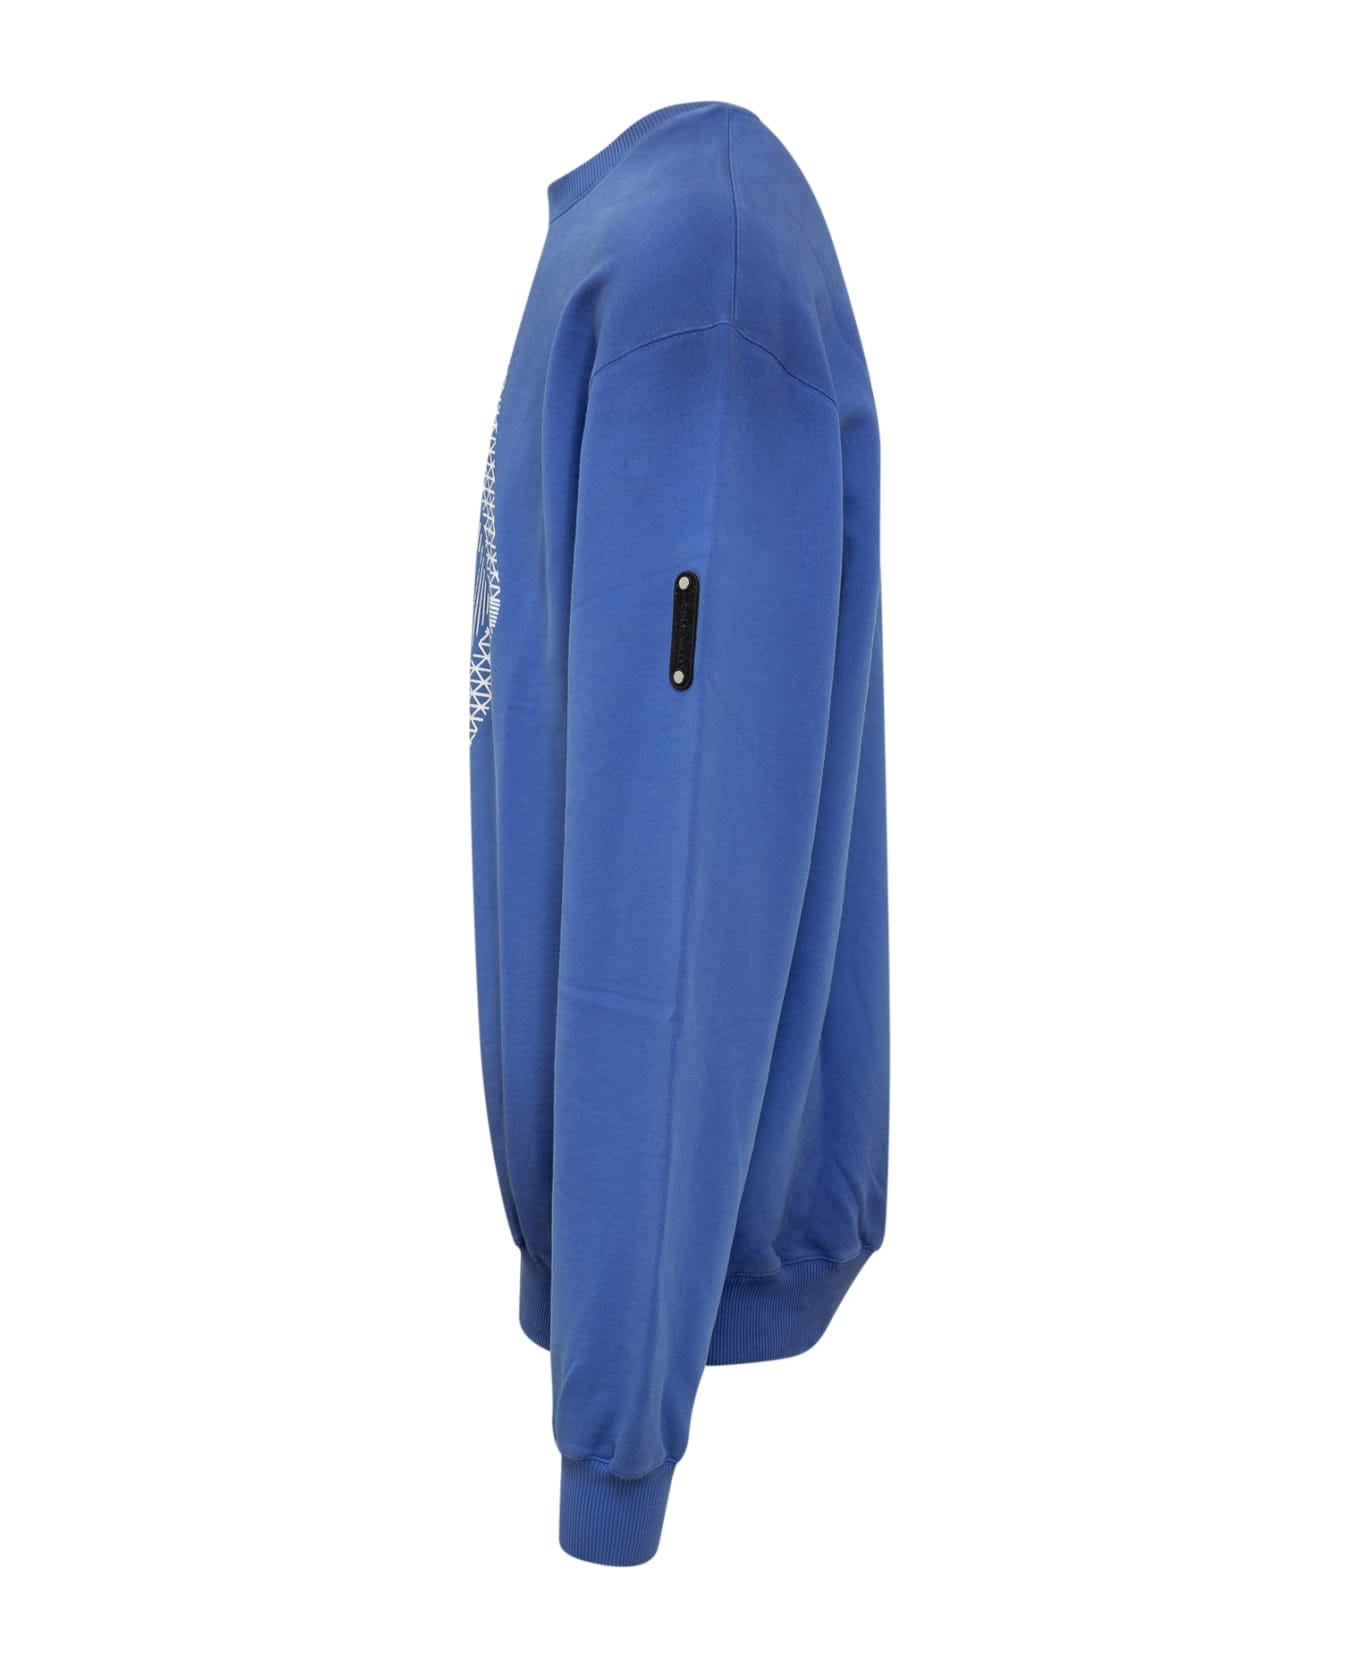 A-COLD-WALL Gradient Sweatshirt - VOLT BLUE フリース